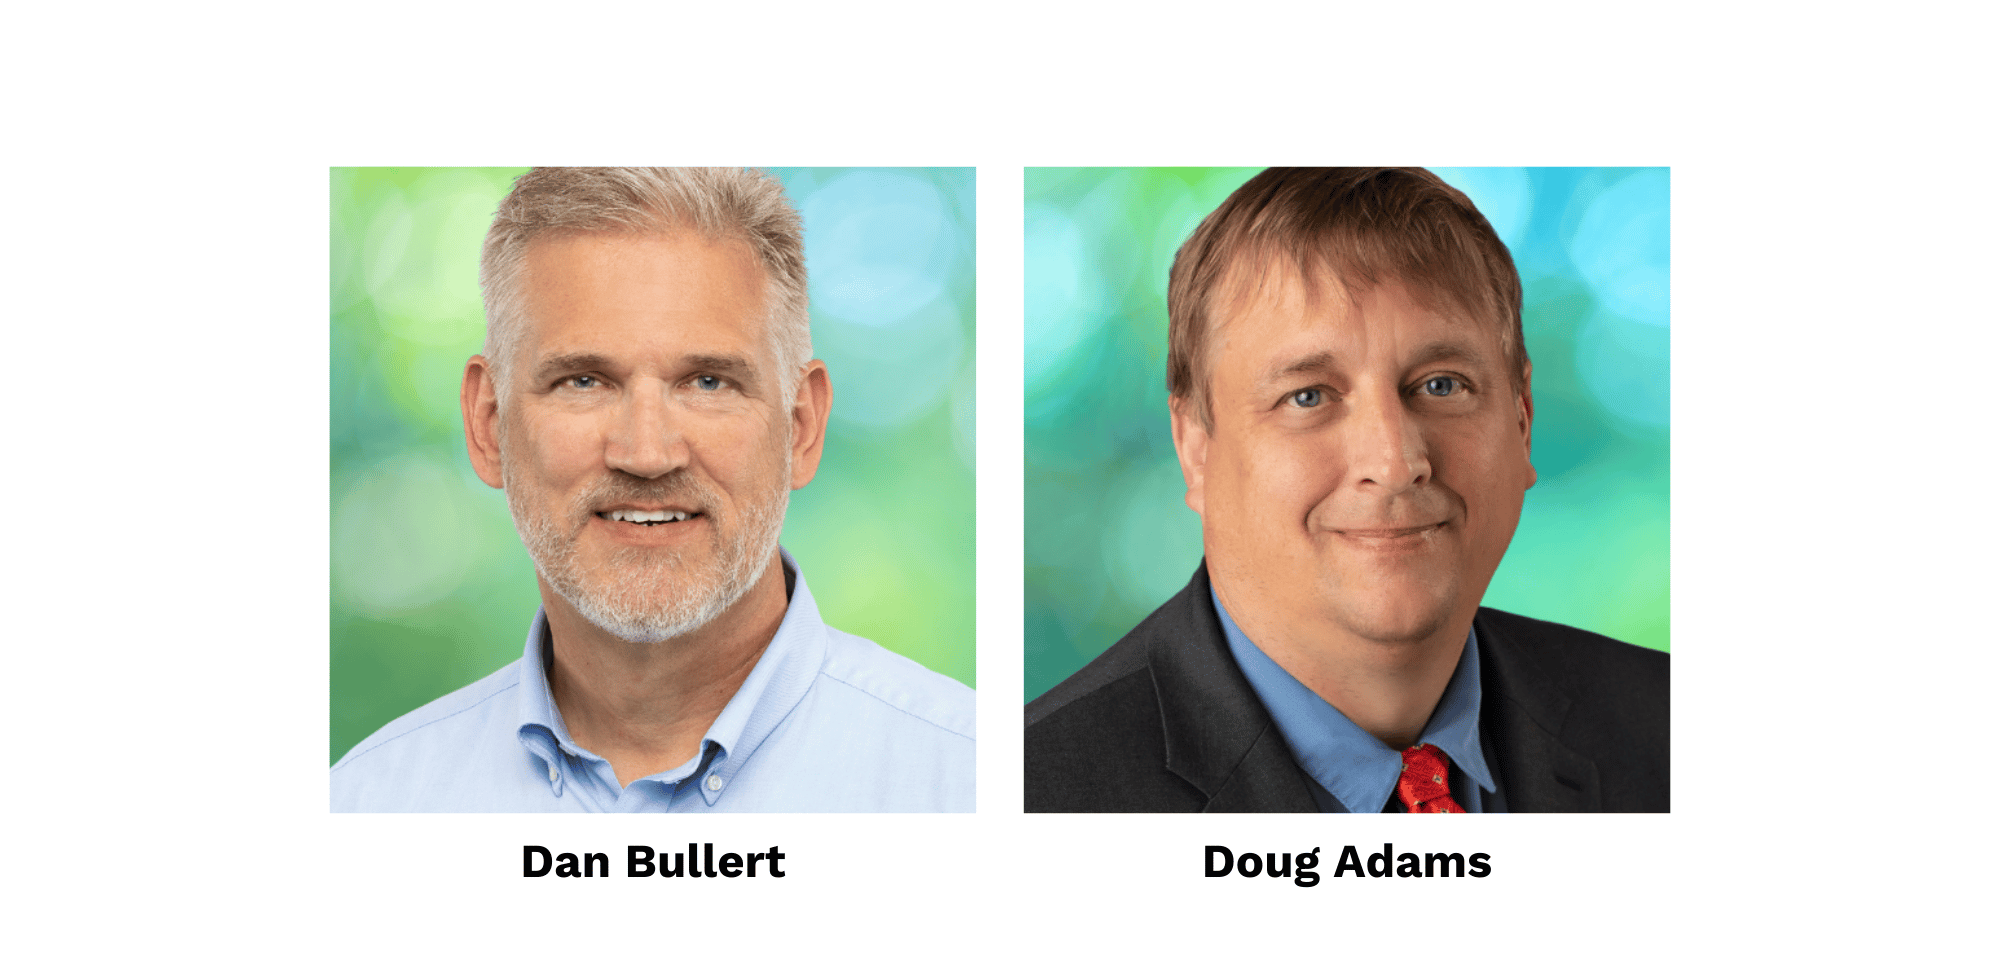 Meet Doug Adams and Dan Bullert